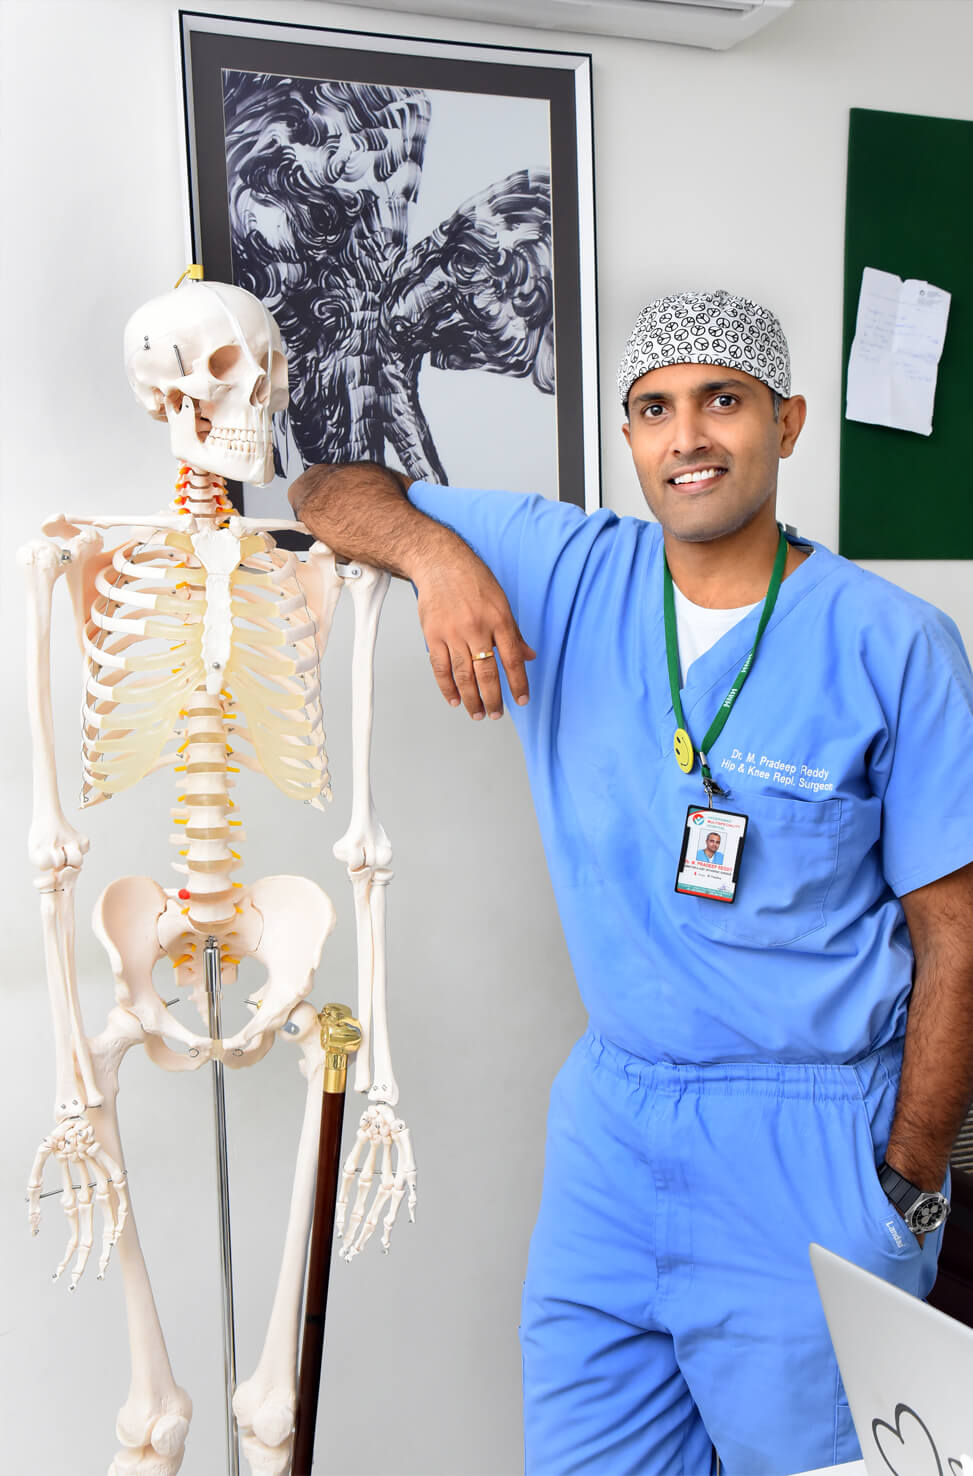 Organizing Orthopedic Health camps - Dr M Pradeep Reddy